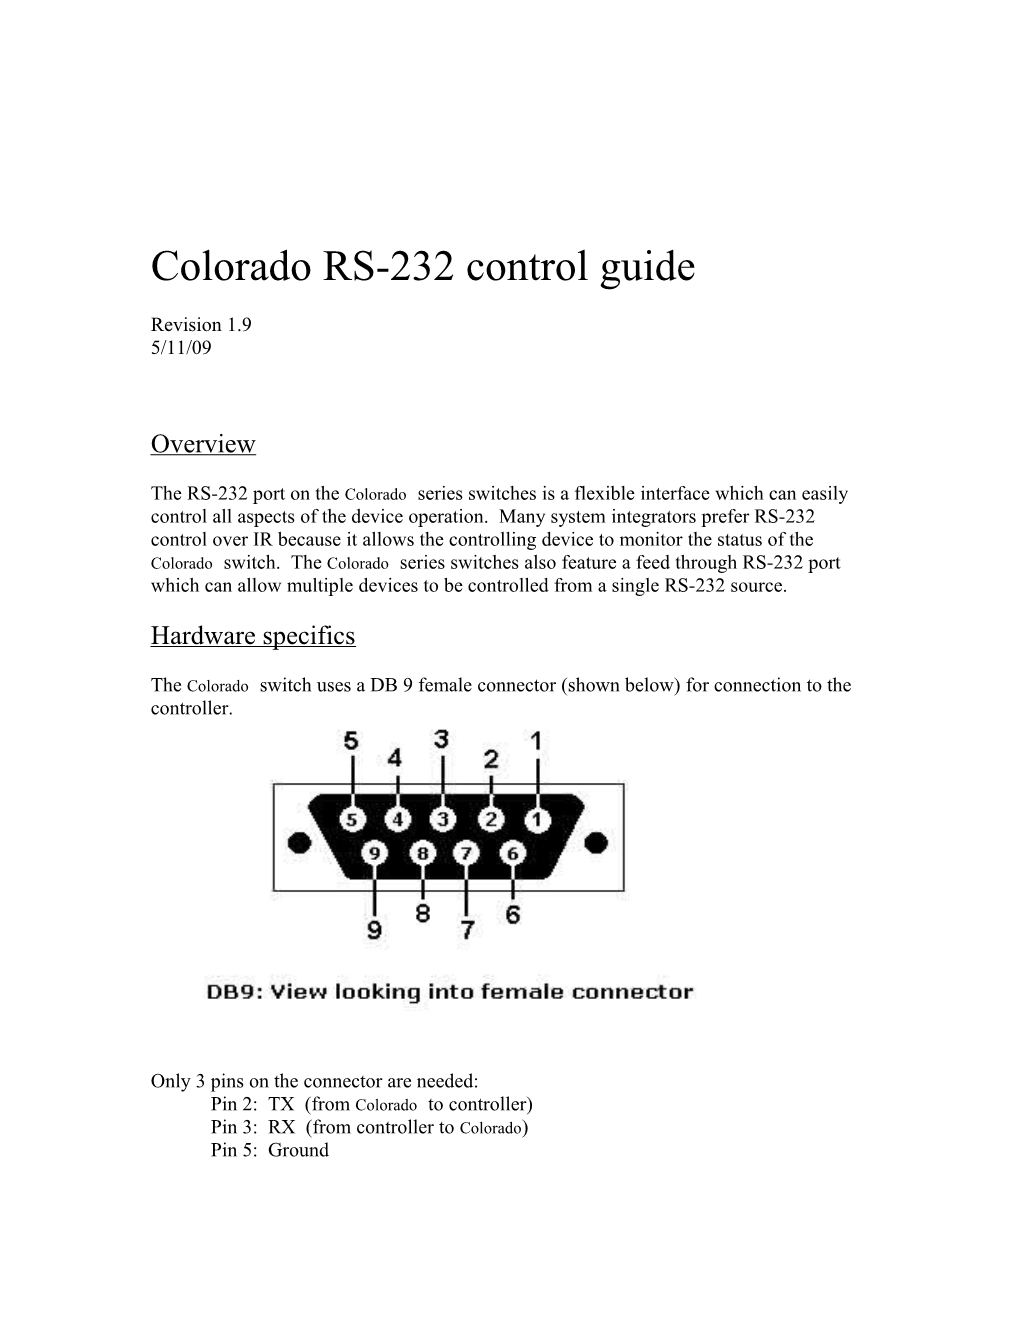 Colorado RS-232 Control Guide